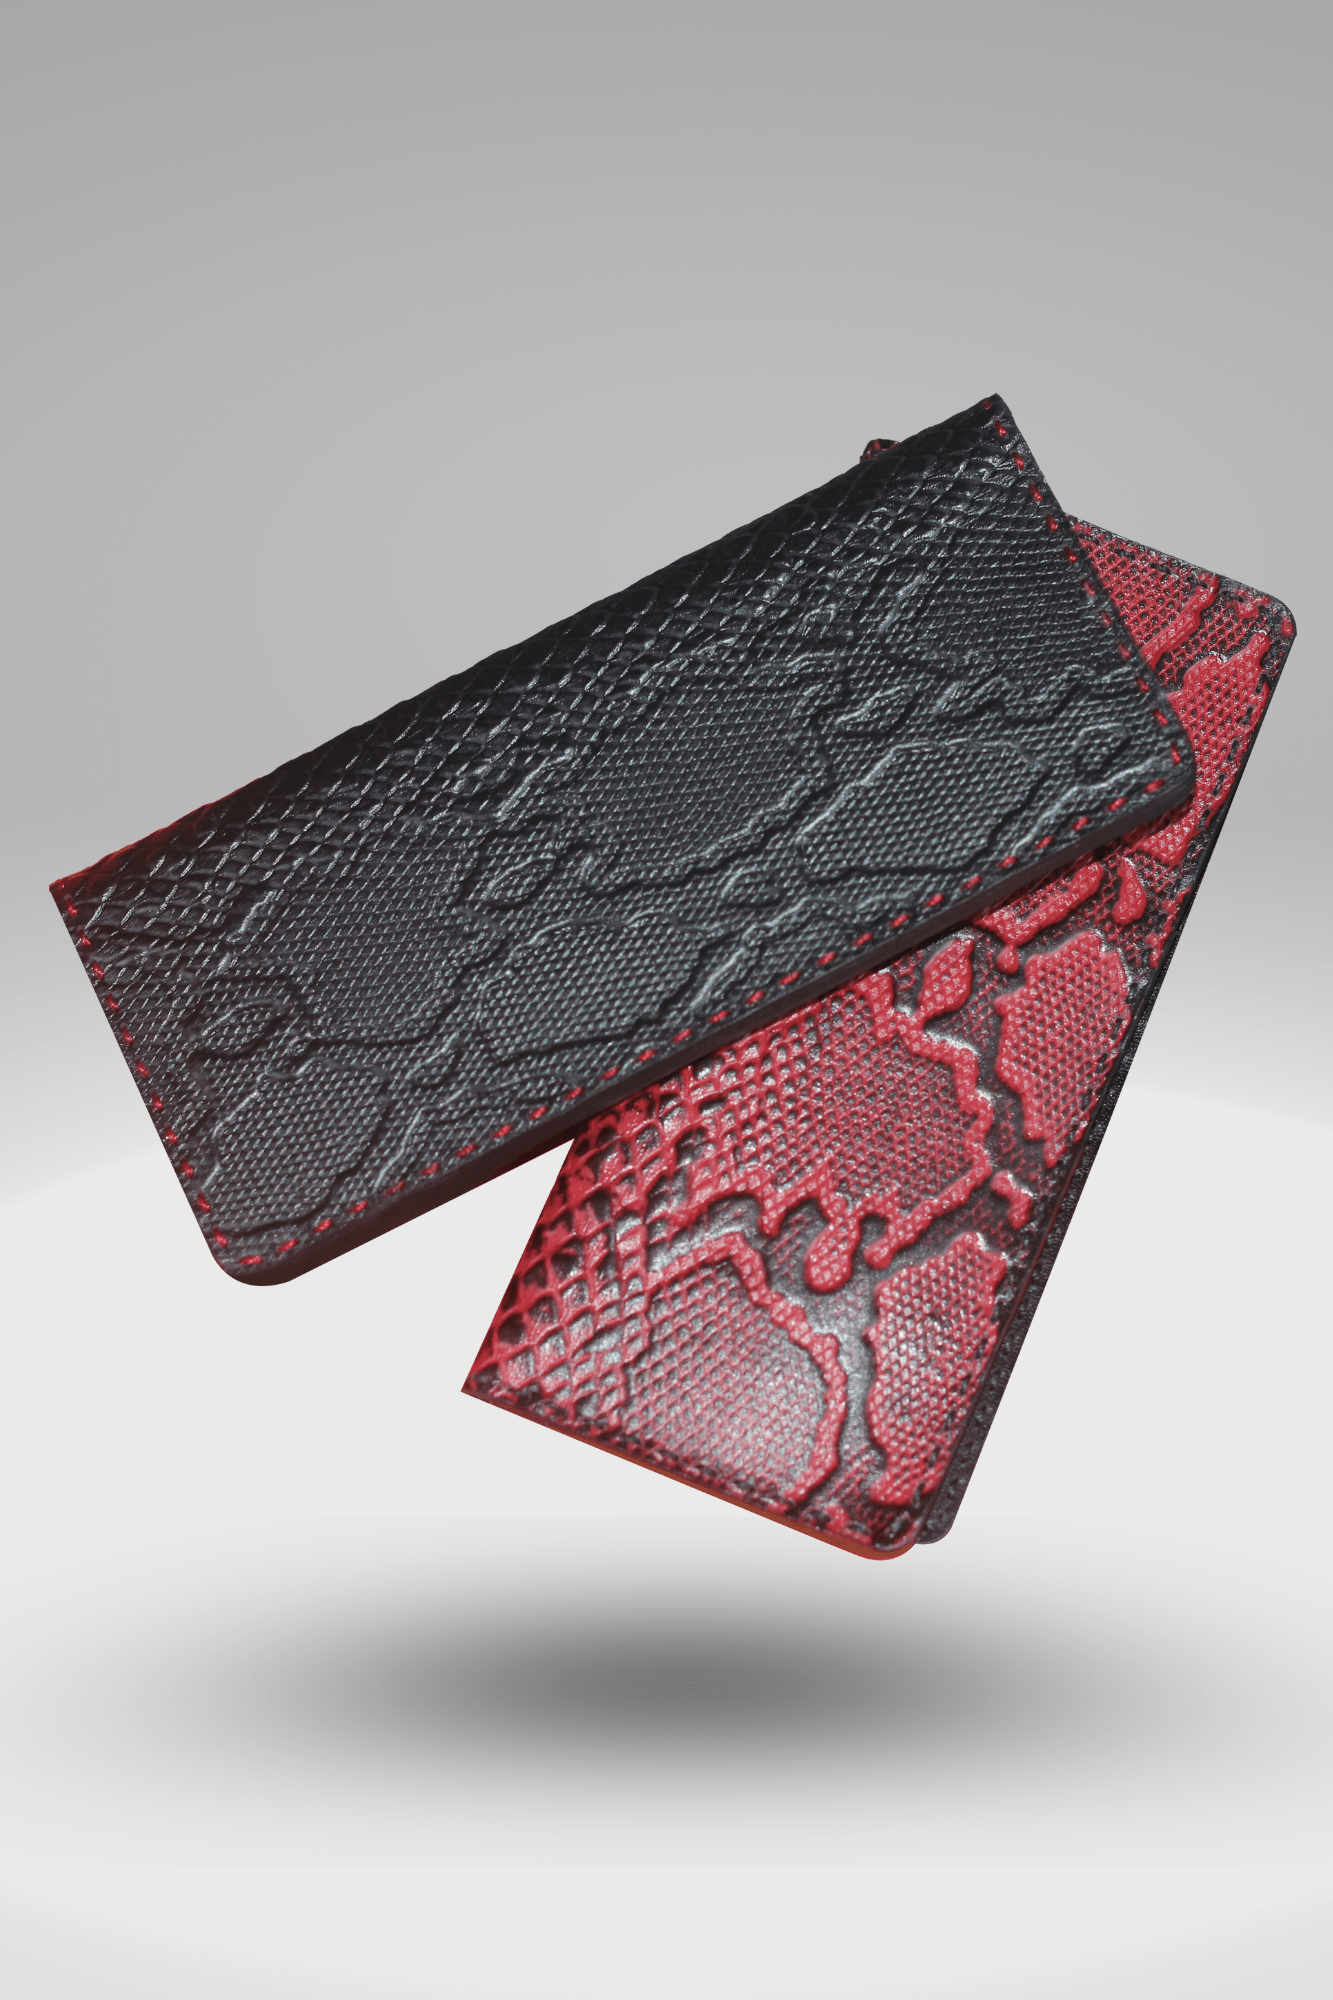 Unisex Genuine Leather Wallet In Black & Maroon Python Textured Finish